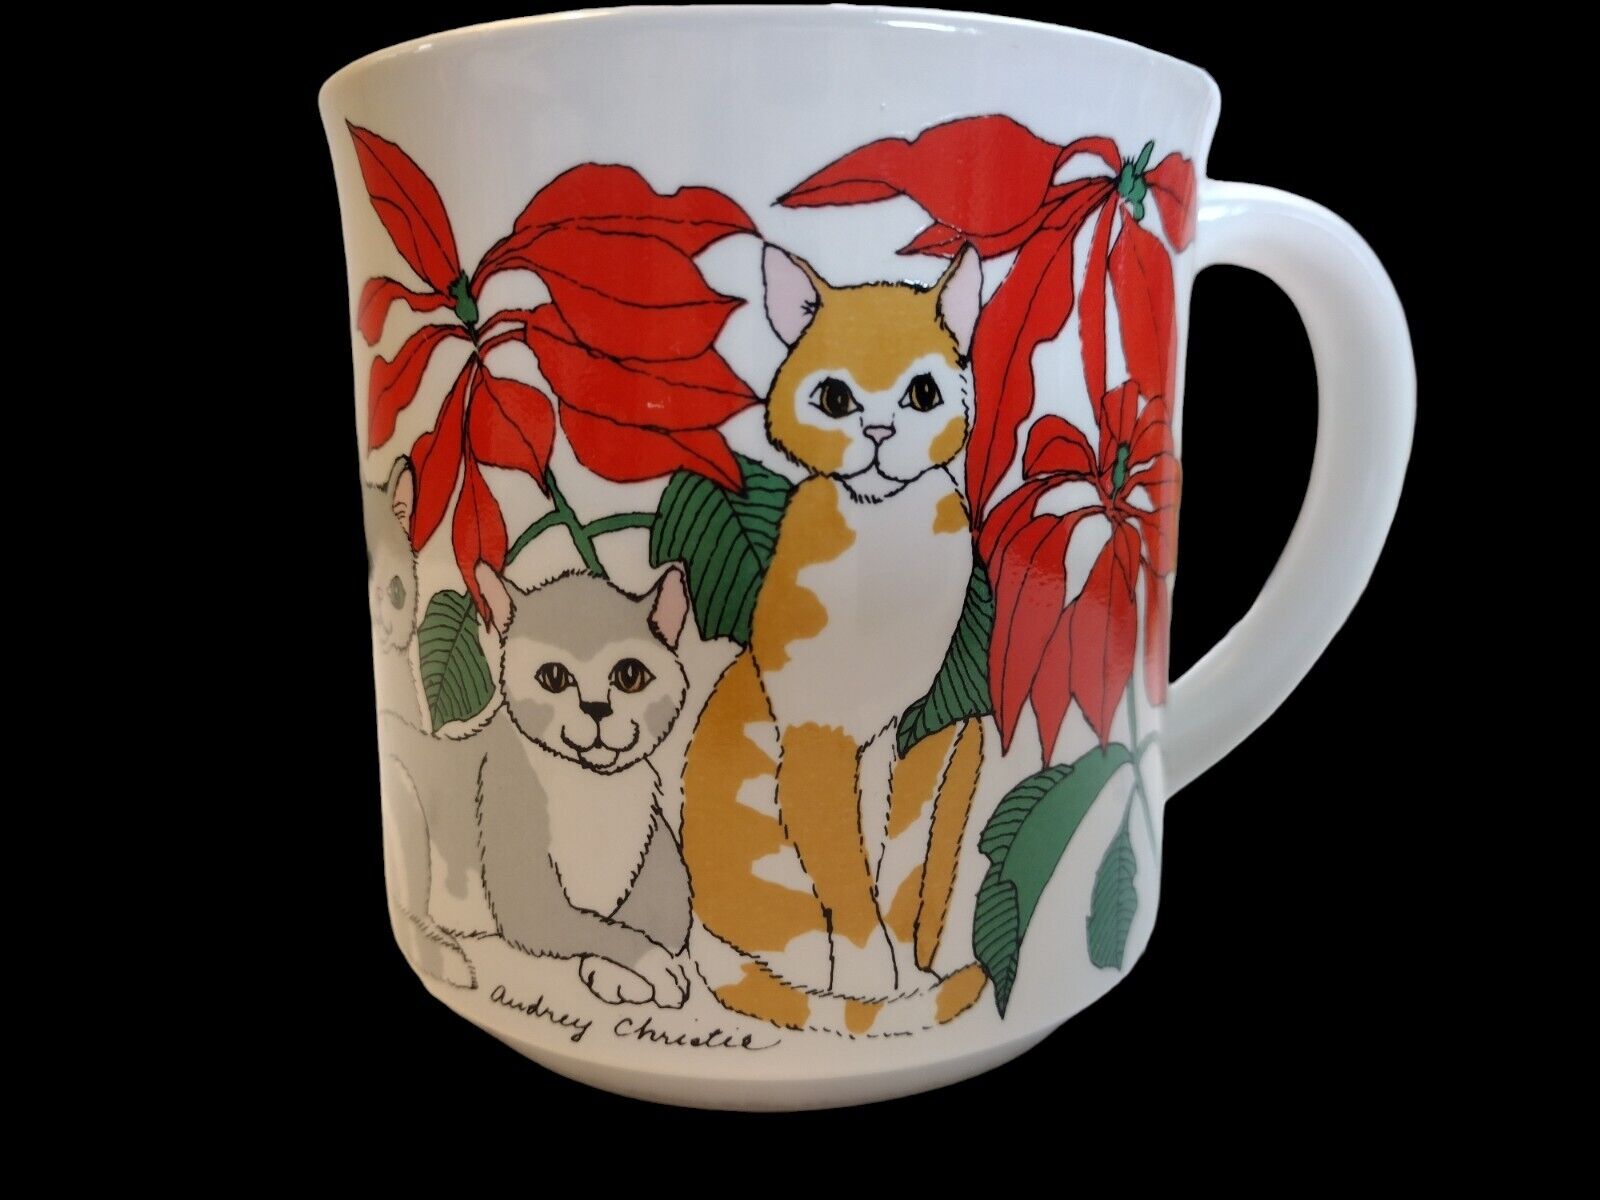 Vintage Audrey Christie Mug Cats & Poinsettias Christmas Holiday Cup Gift Feline